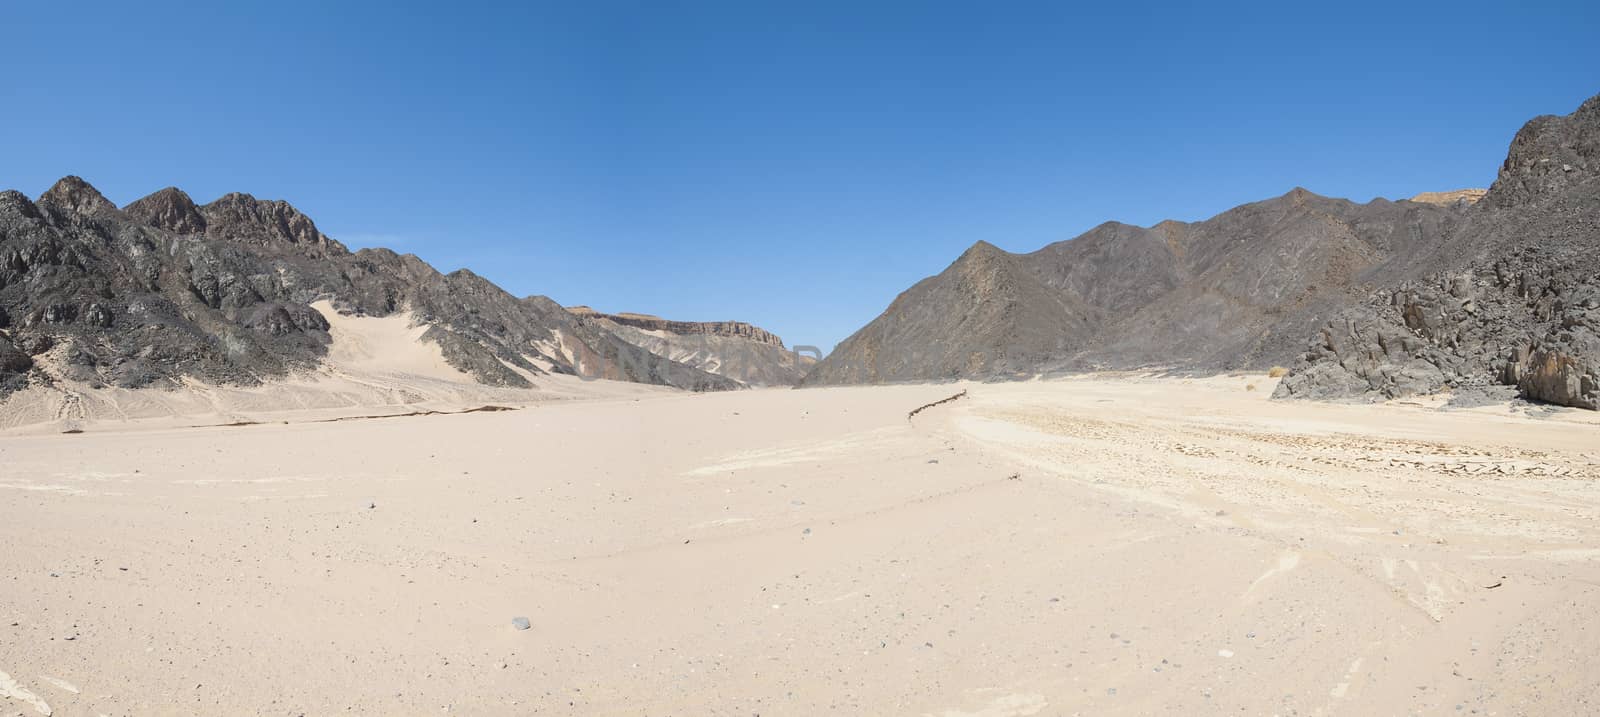 Dry river valley in desert mountains by paulvinten